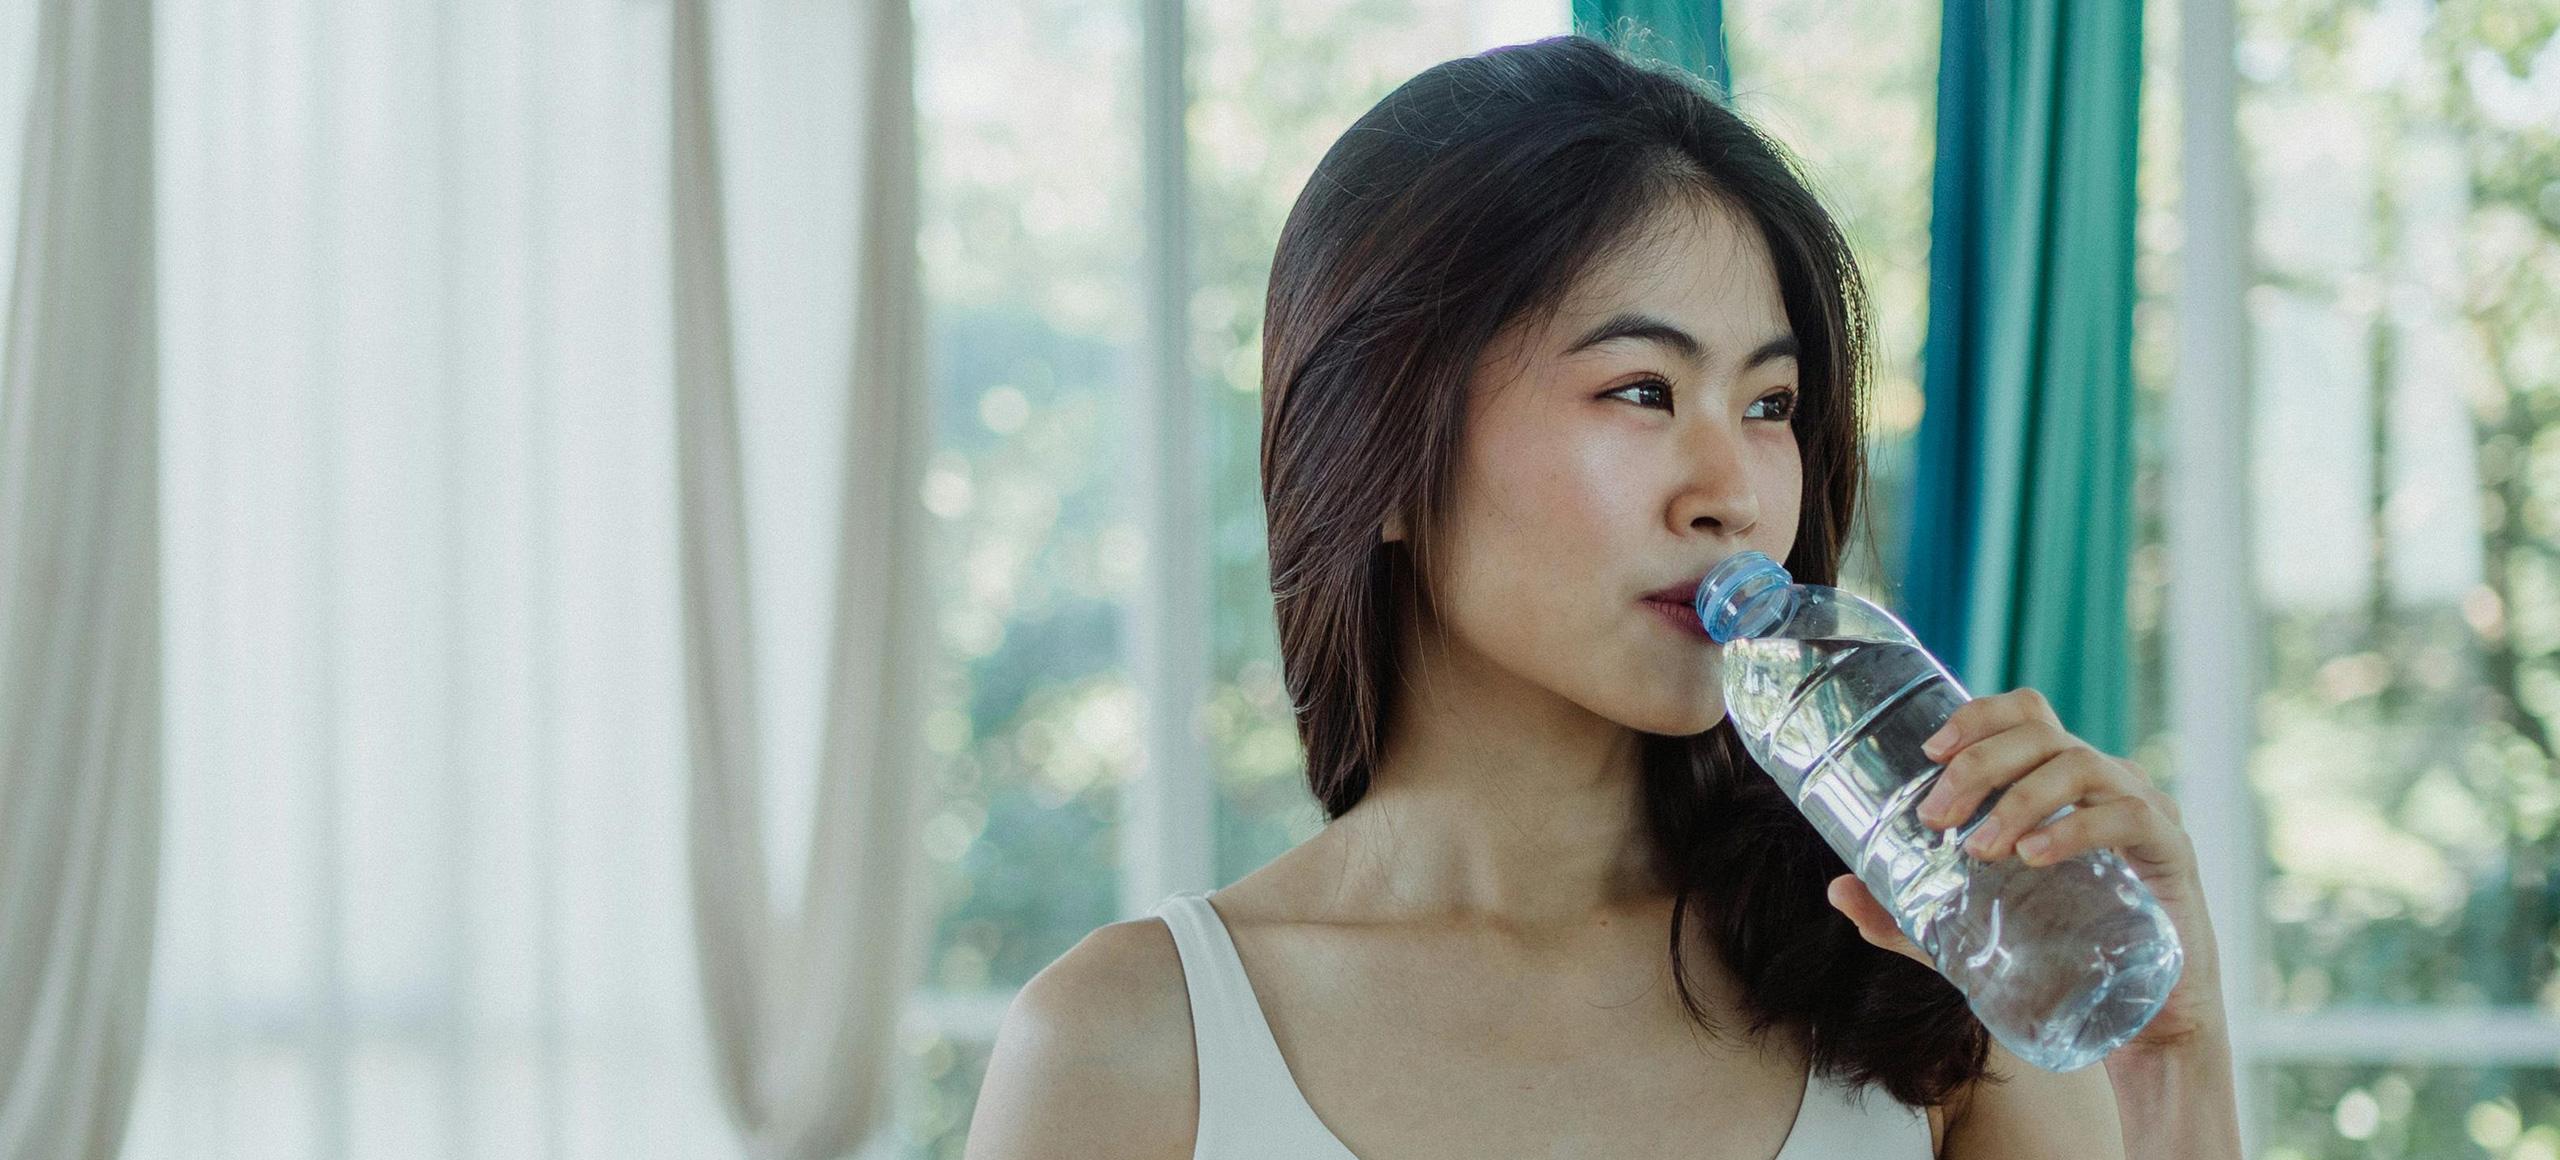 Woman drinking water from single-use plastic bottle